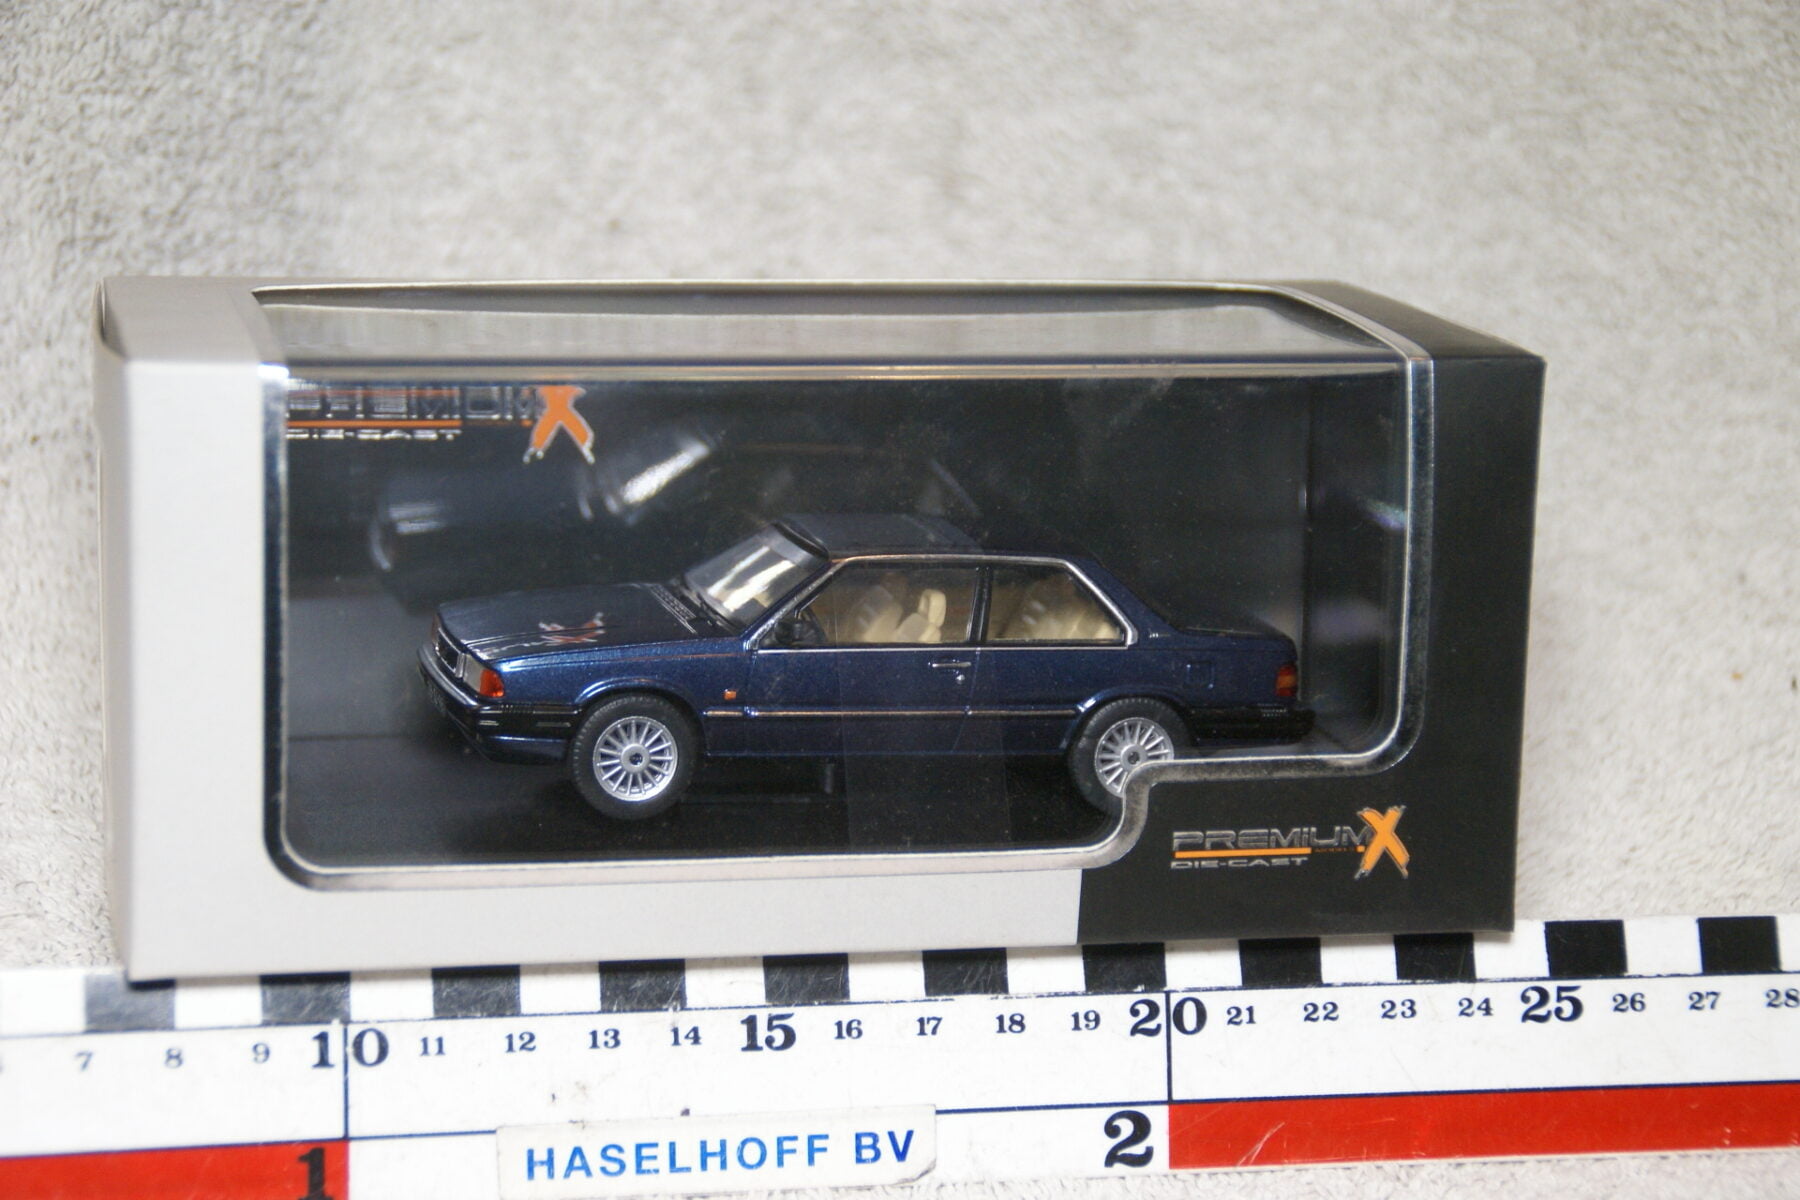 DSC07376 miniatuur 1977 Volvo 780 blauw 1op43 210001 PremiumX PRD371 702034 MB